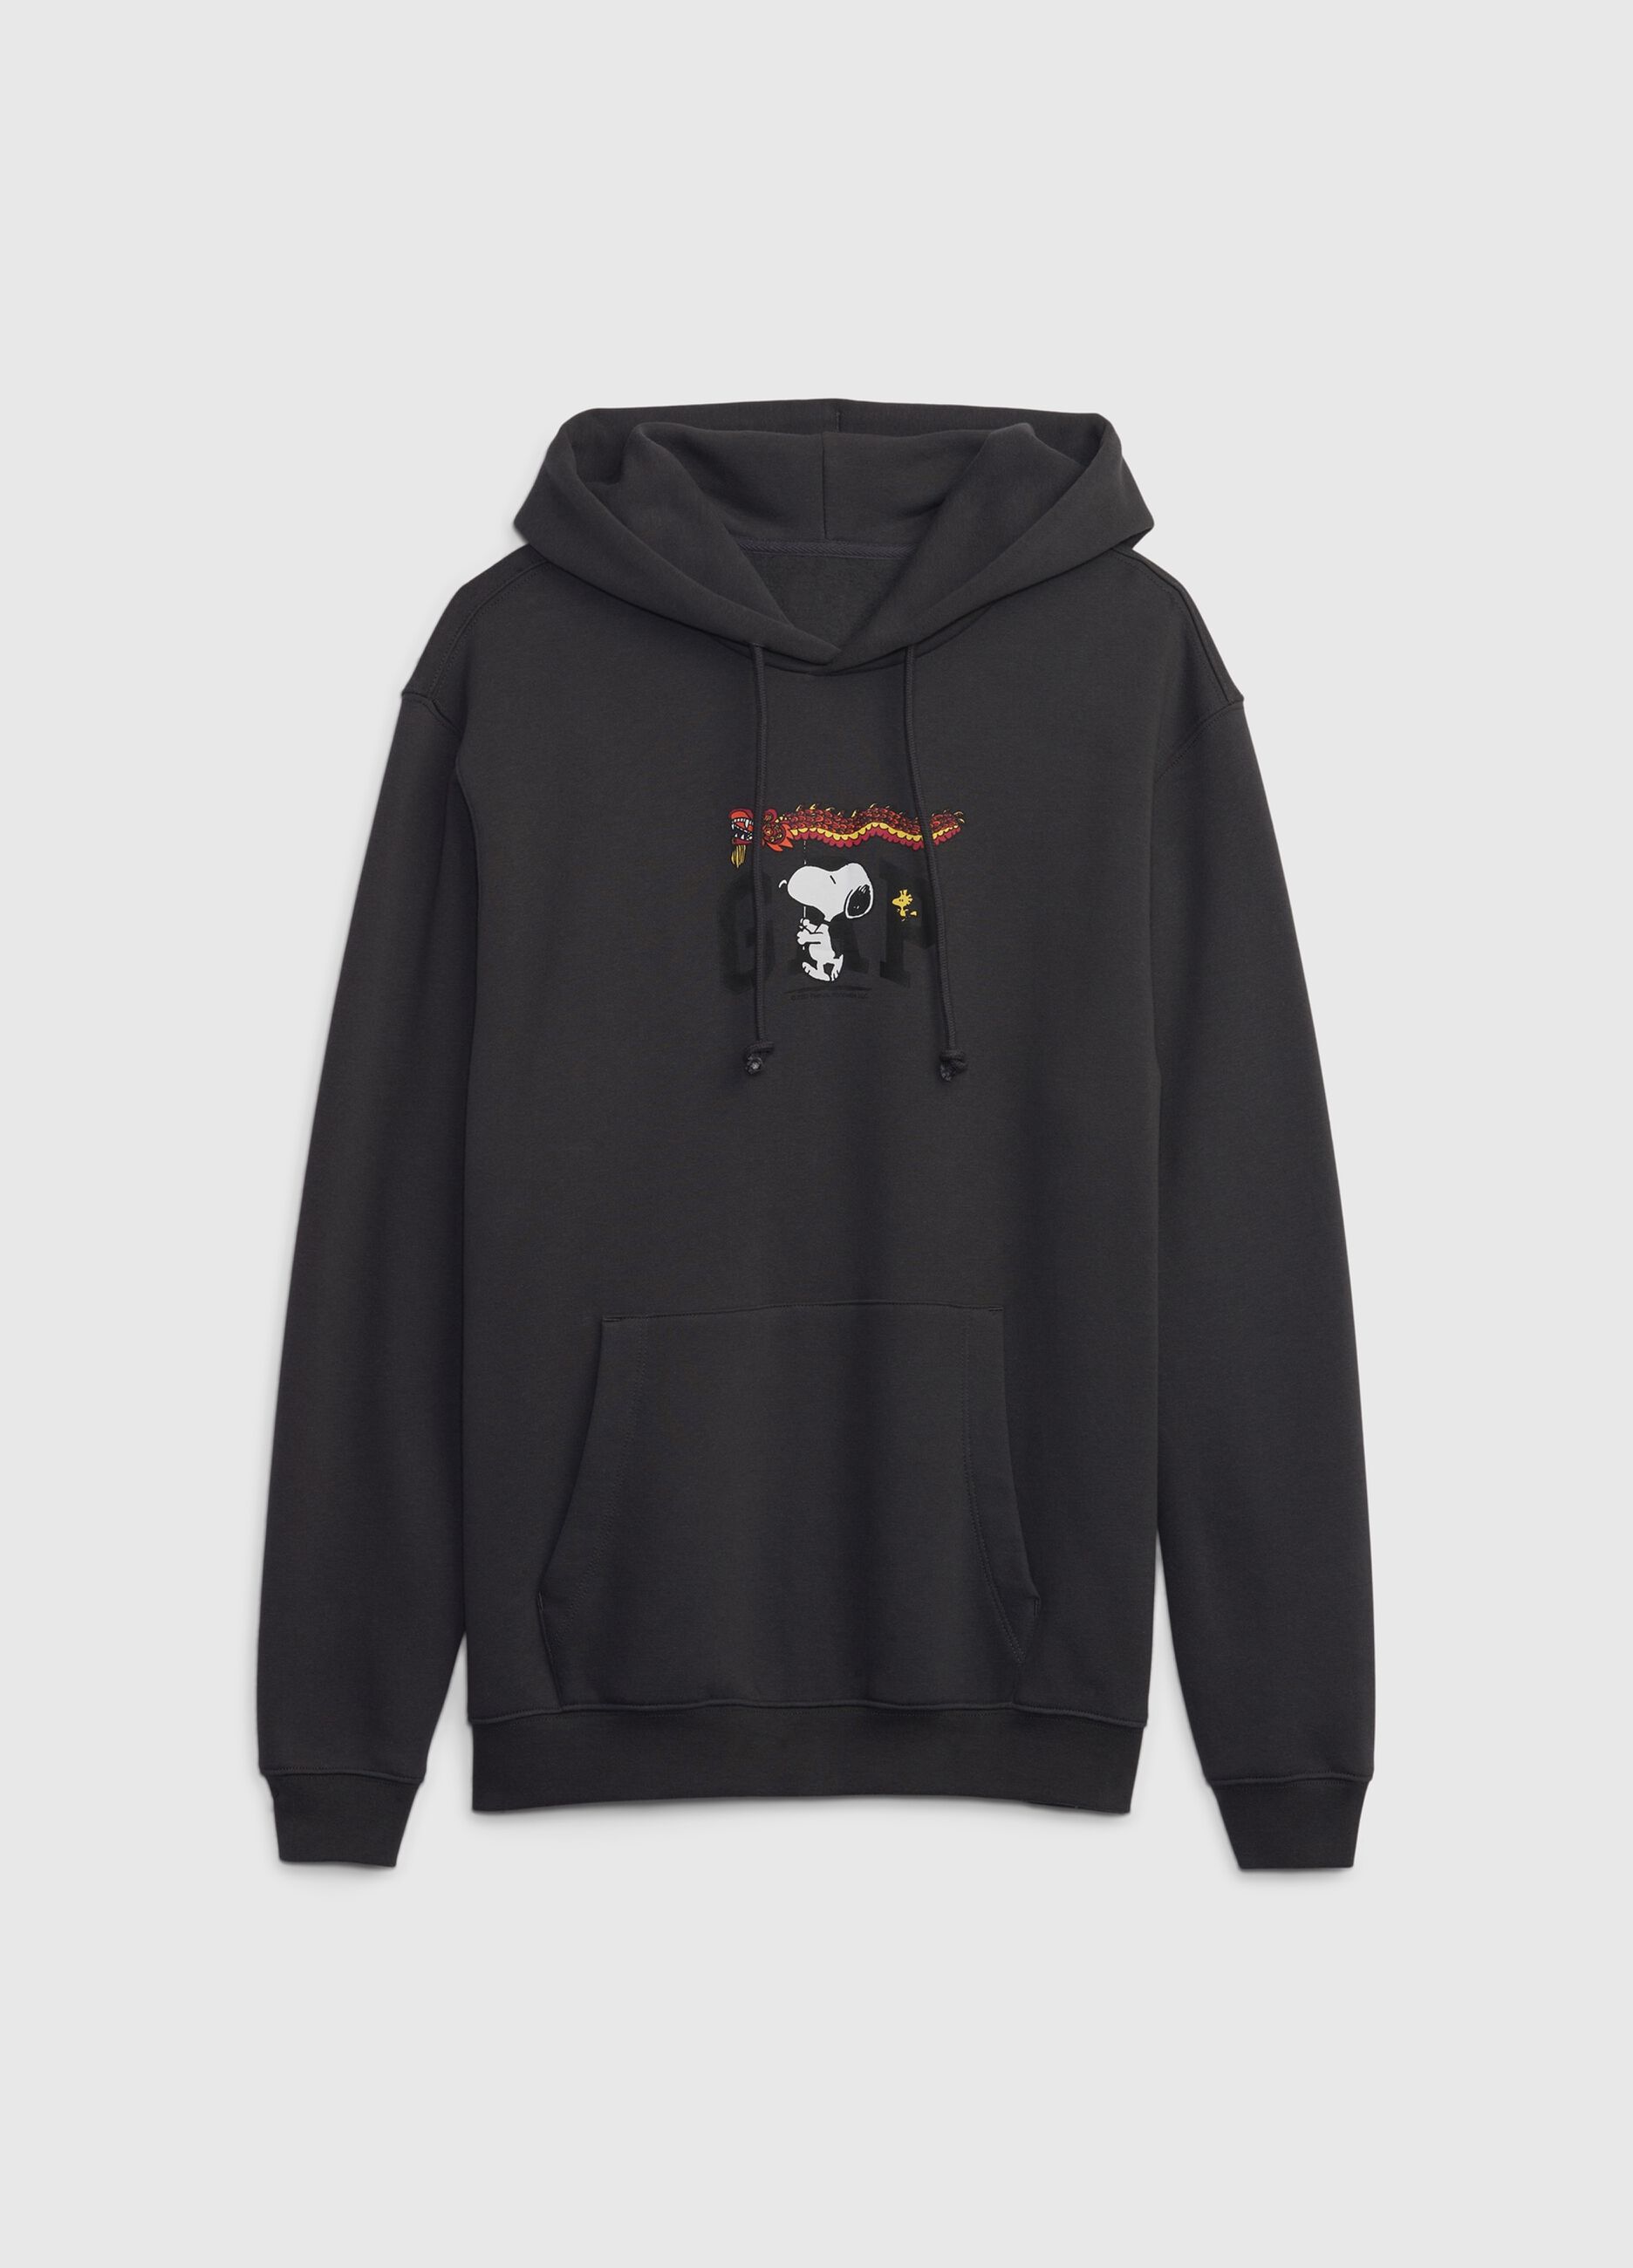 Sweatshirt with hood and Snoopy and logo print